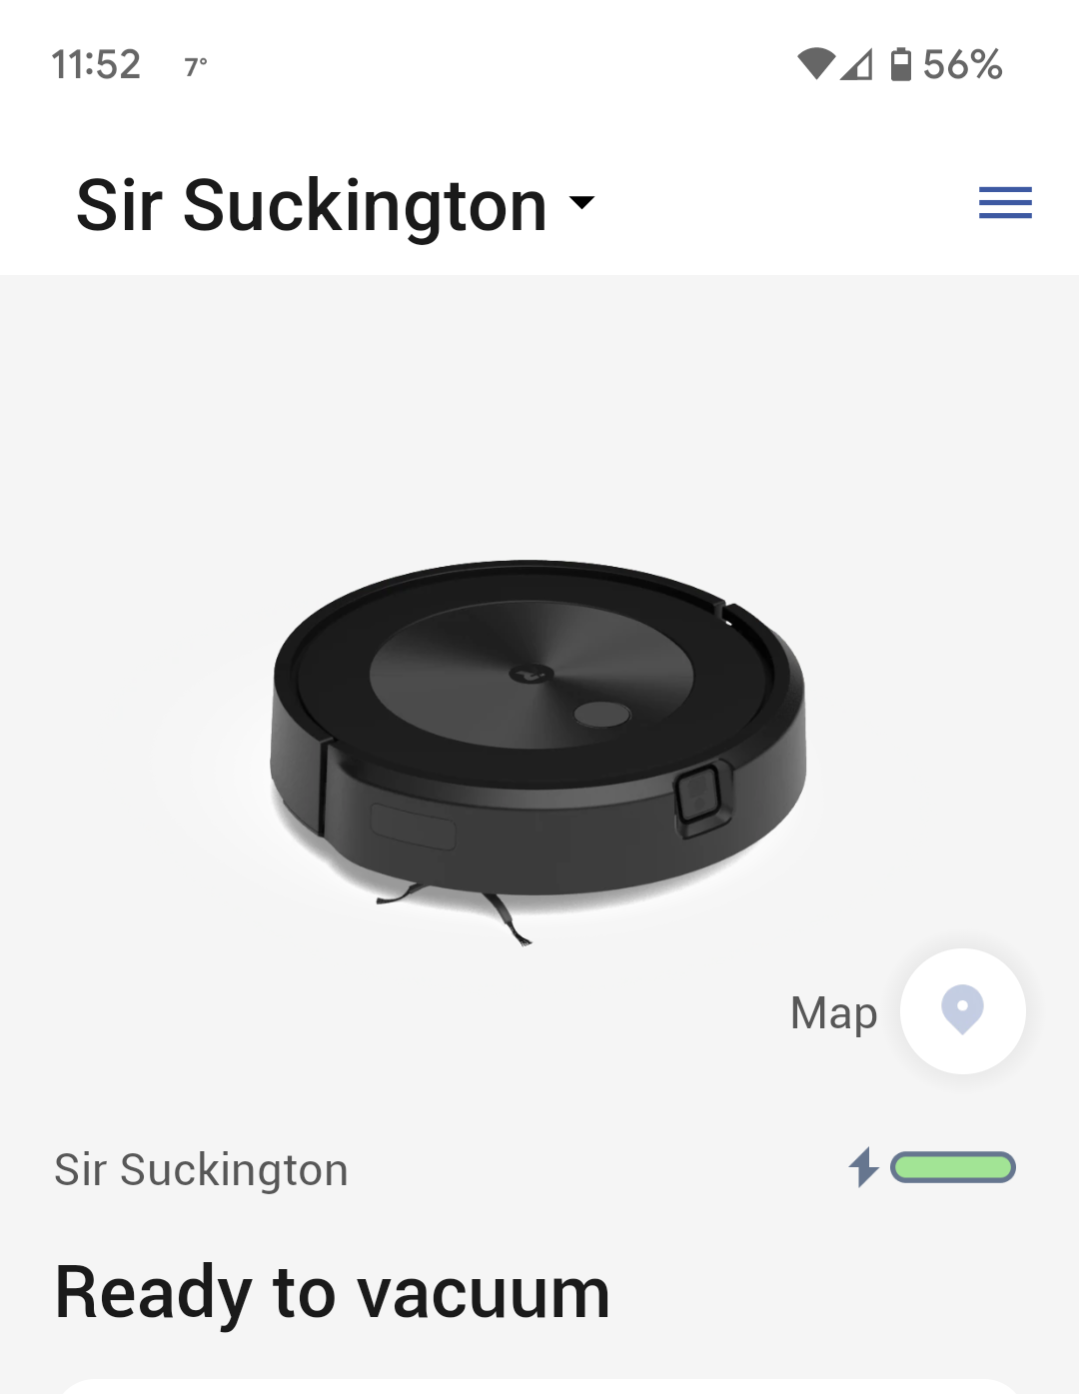 Sir Suckington